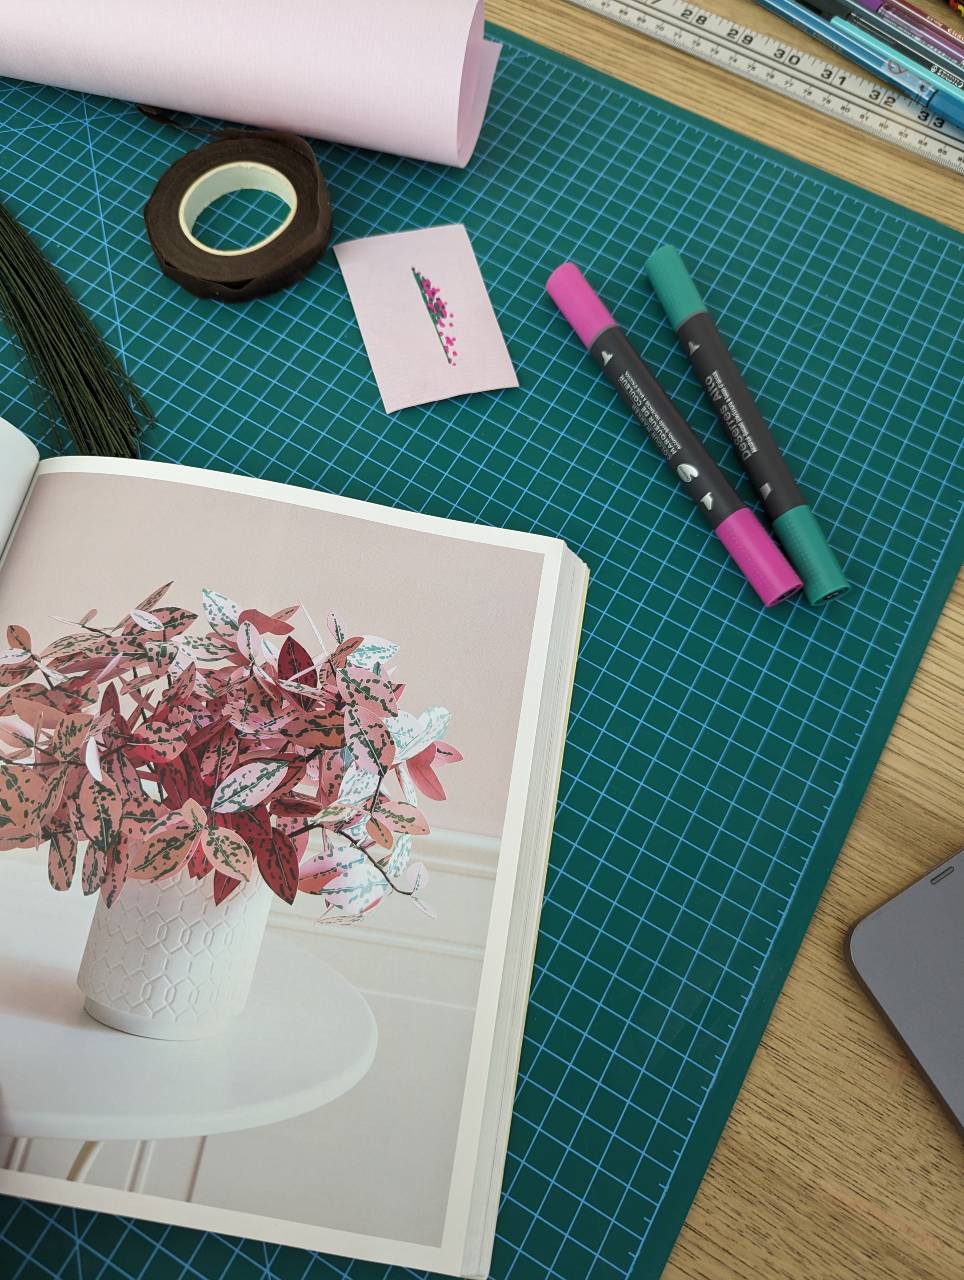 Atelier créatif - Plante en papier - Polka dot